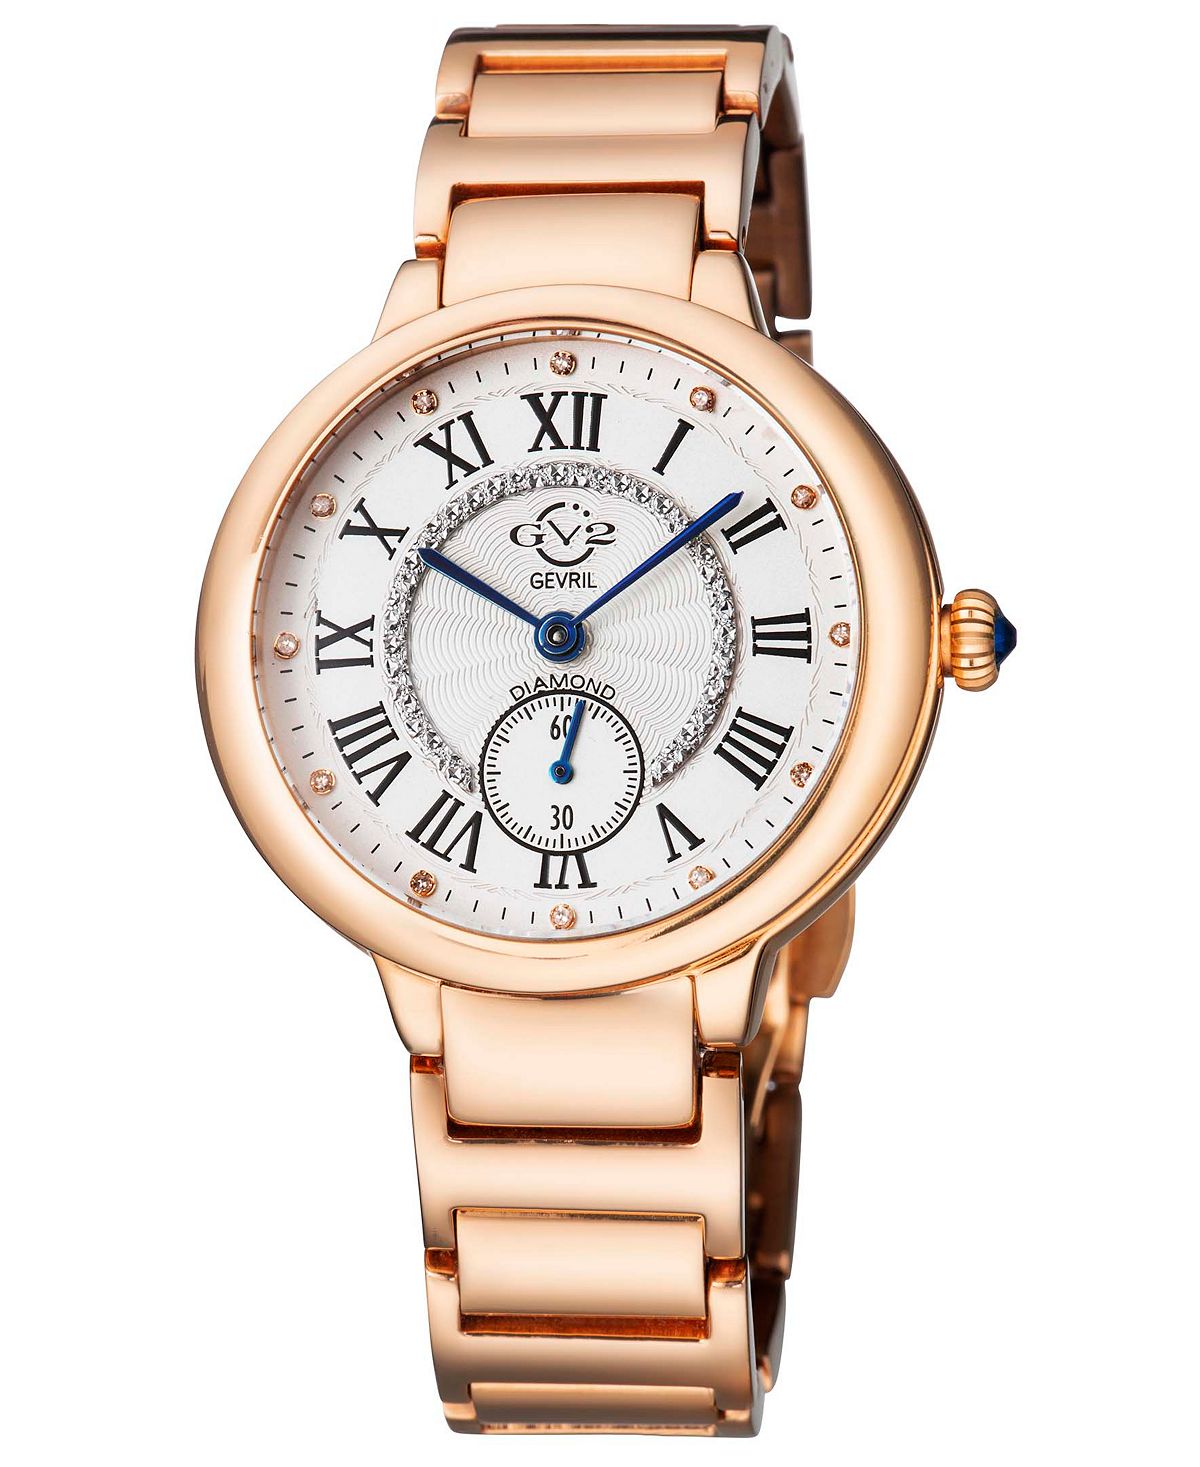 цена Женские часы Rome из нержавеющей стали со швейцарским кварцем цвета розового золота, 36 мм GV2 by Gevril